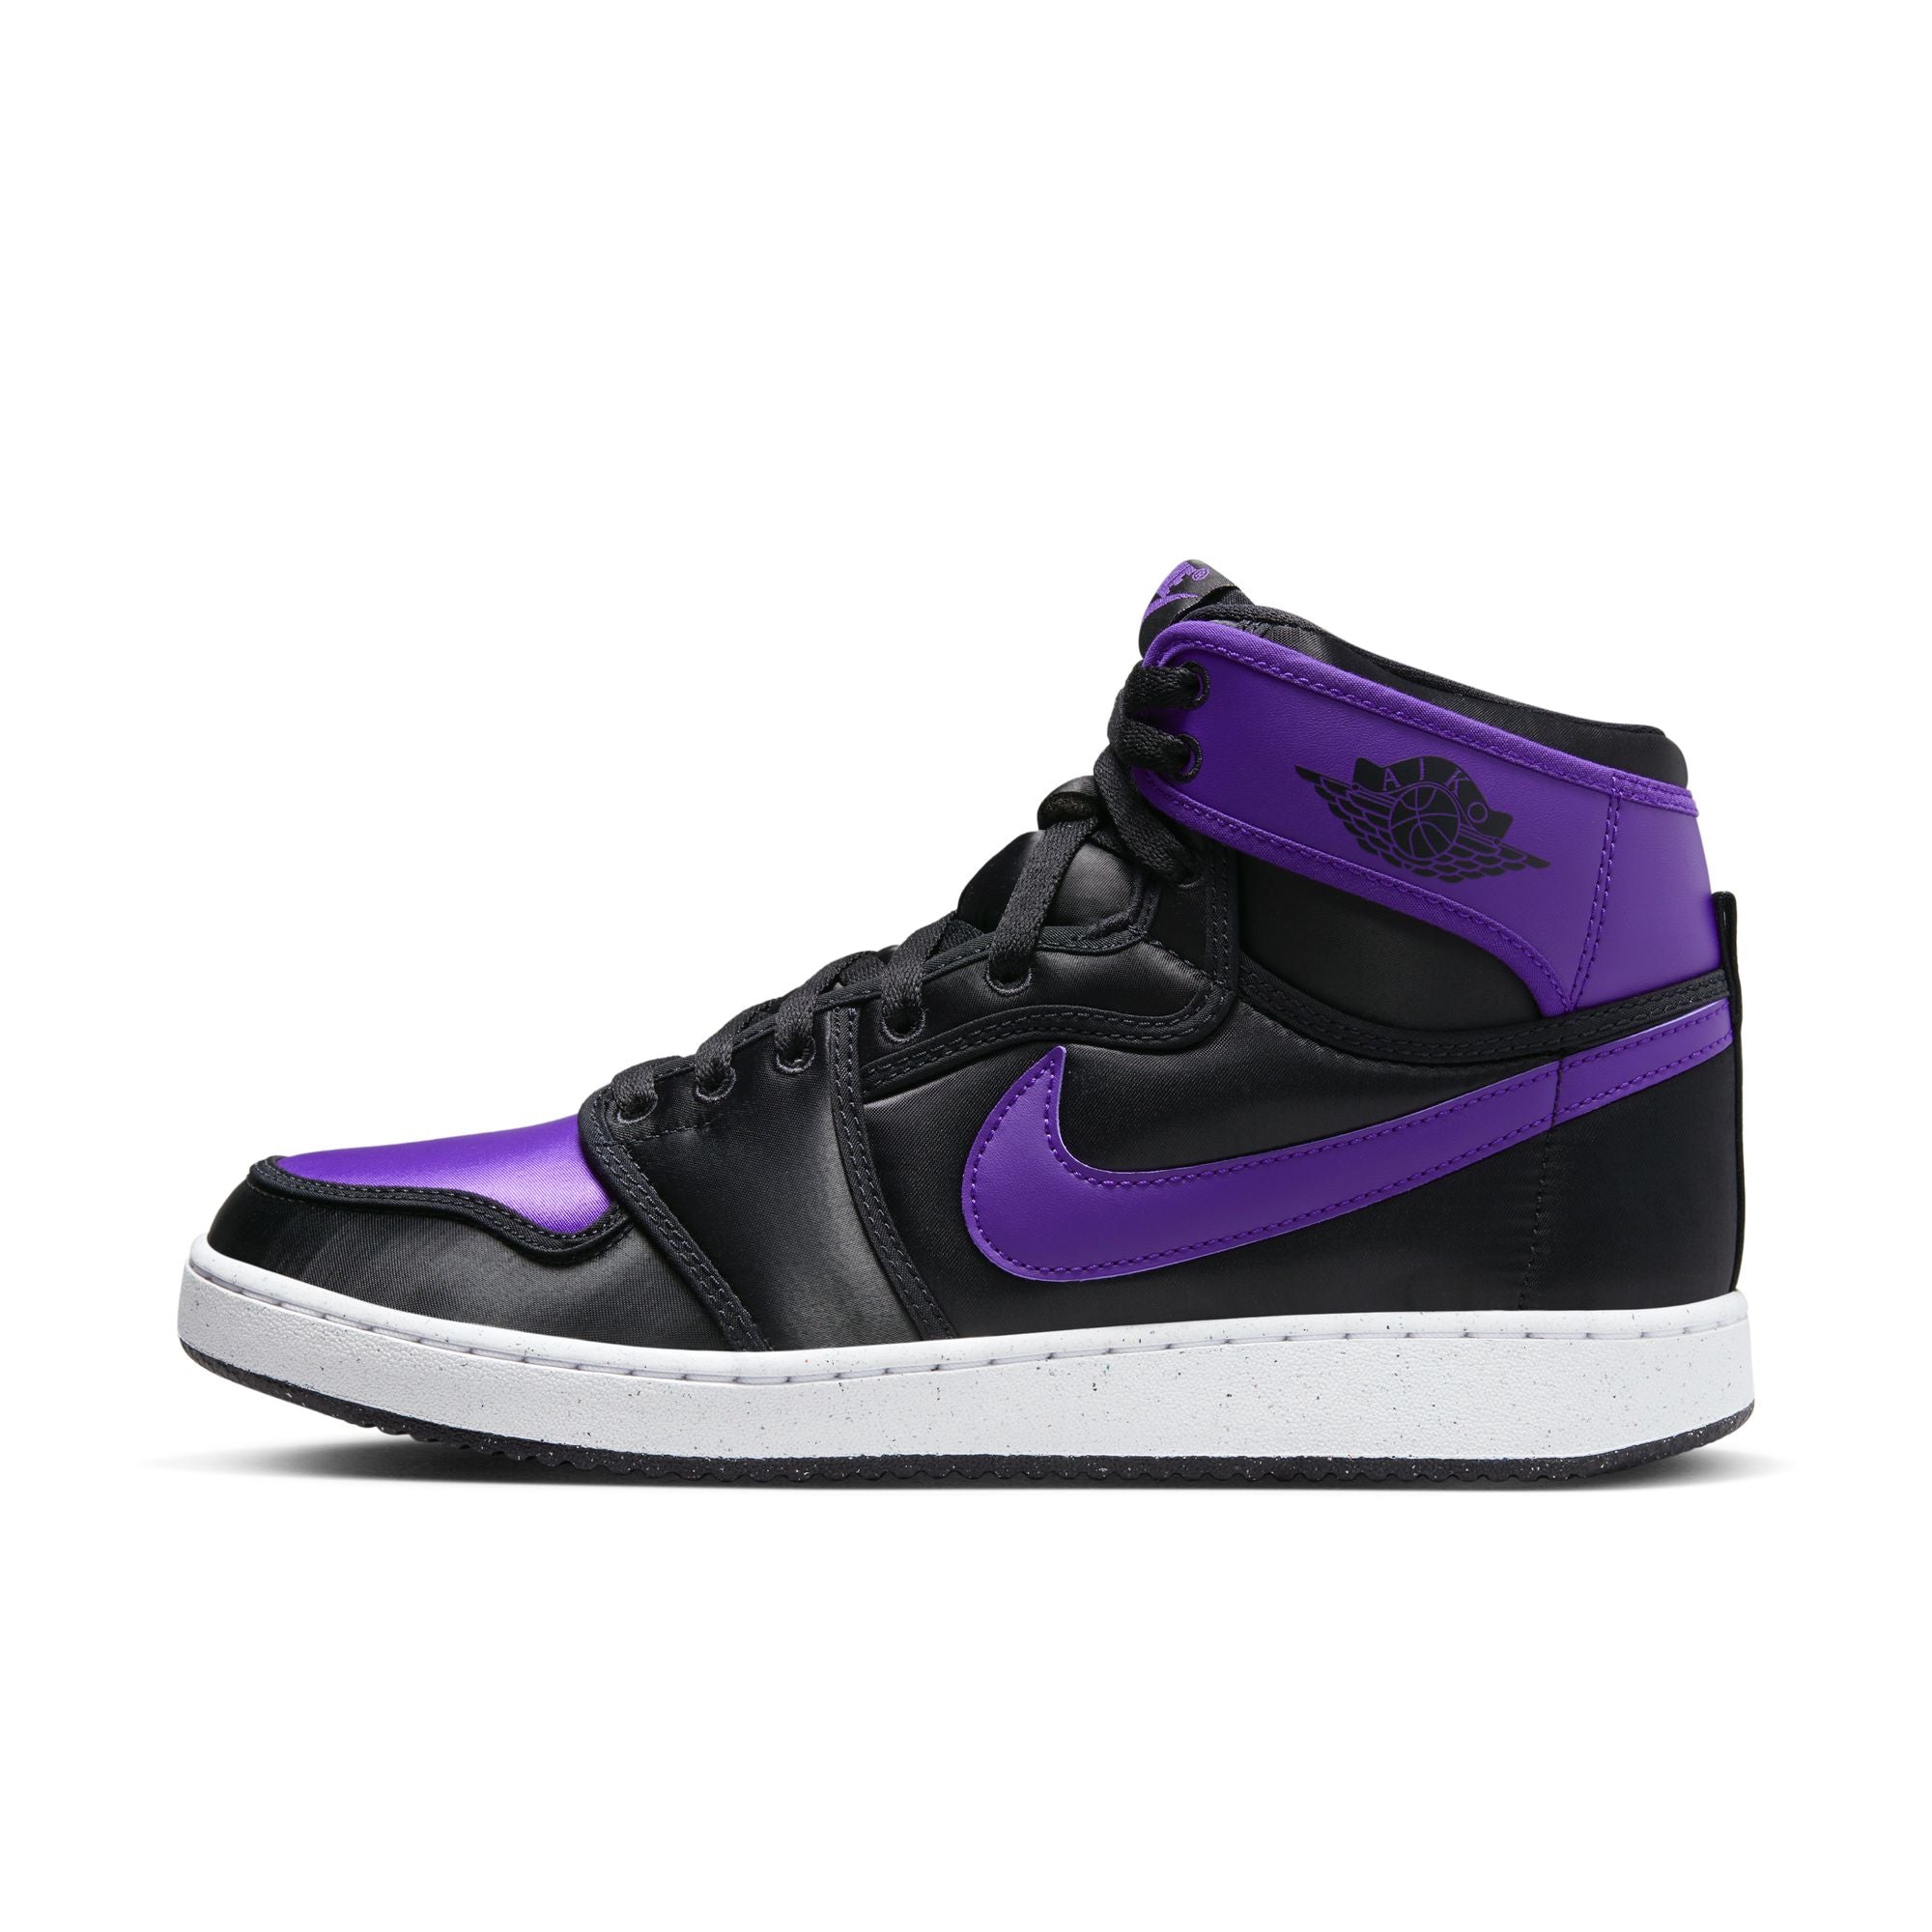 Air Jordan 1 KO 'Black/Purple'